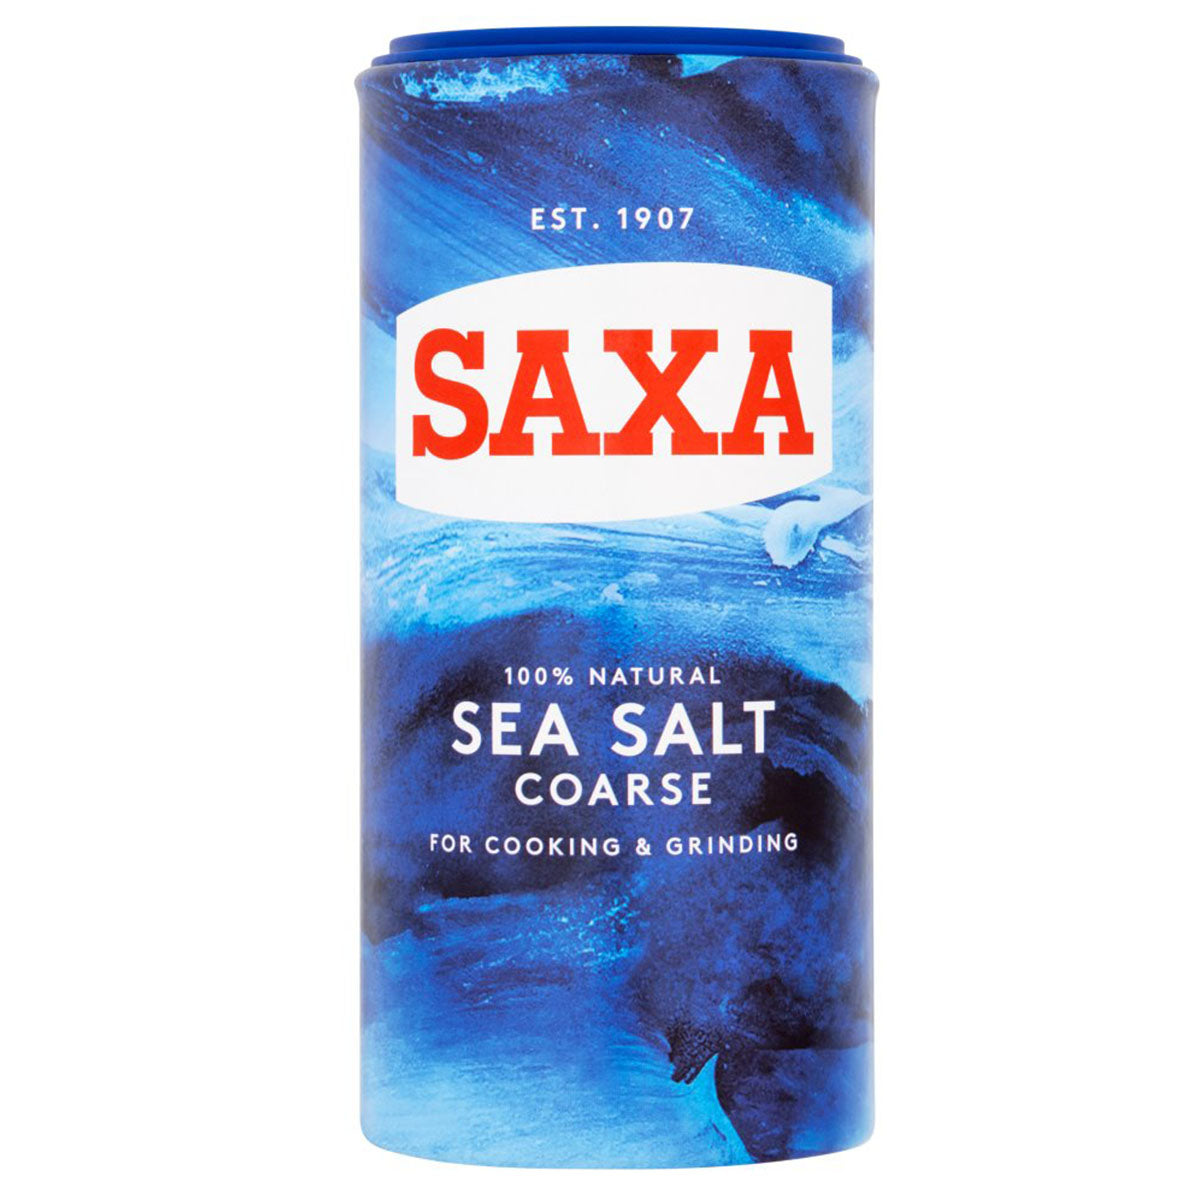 Saxa - Sea Salt Coarse - 350g - Continental Food Store